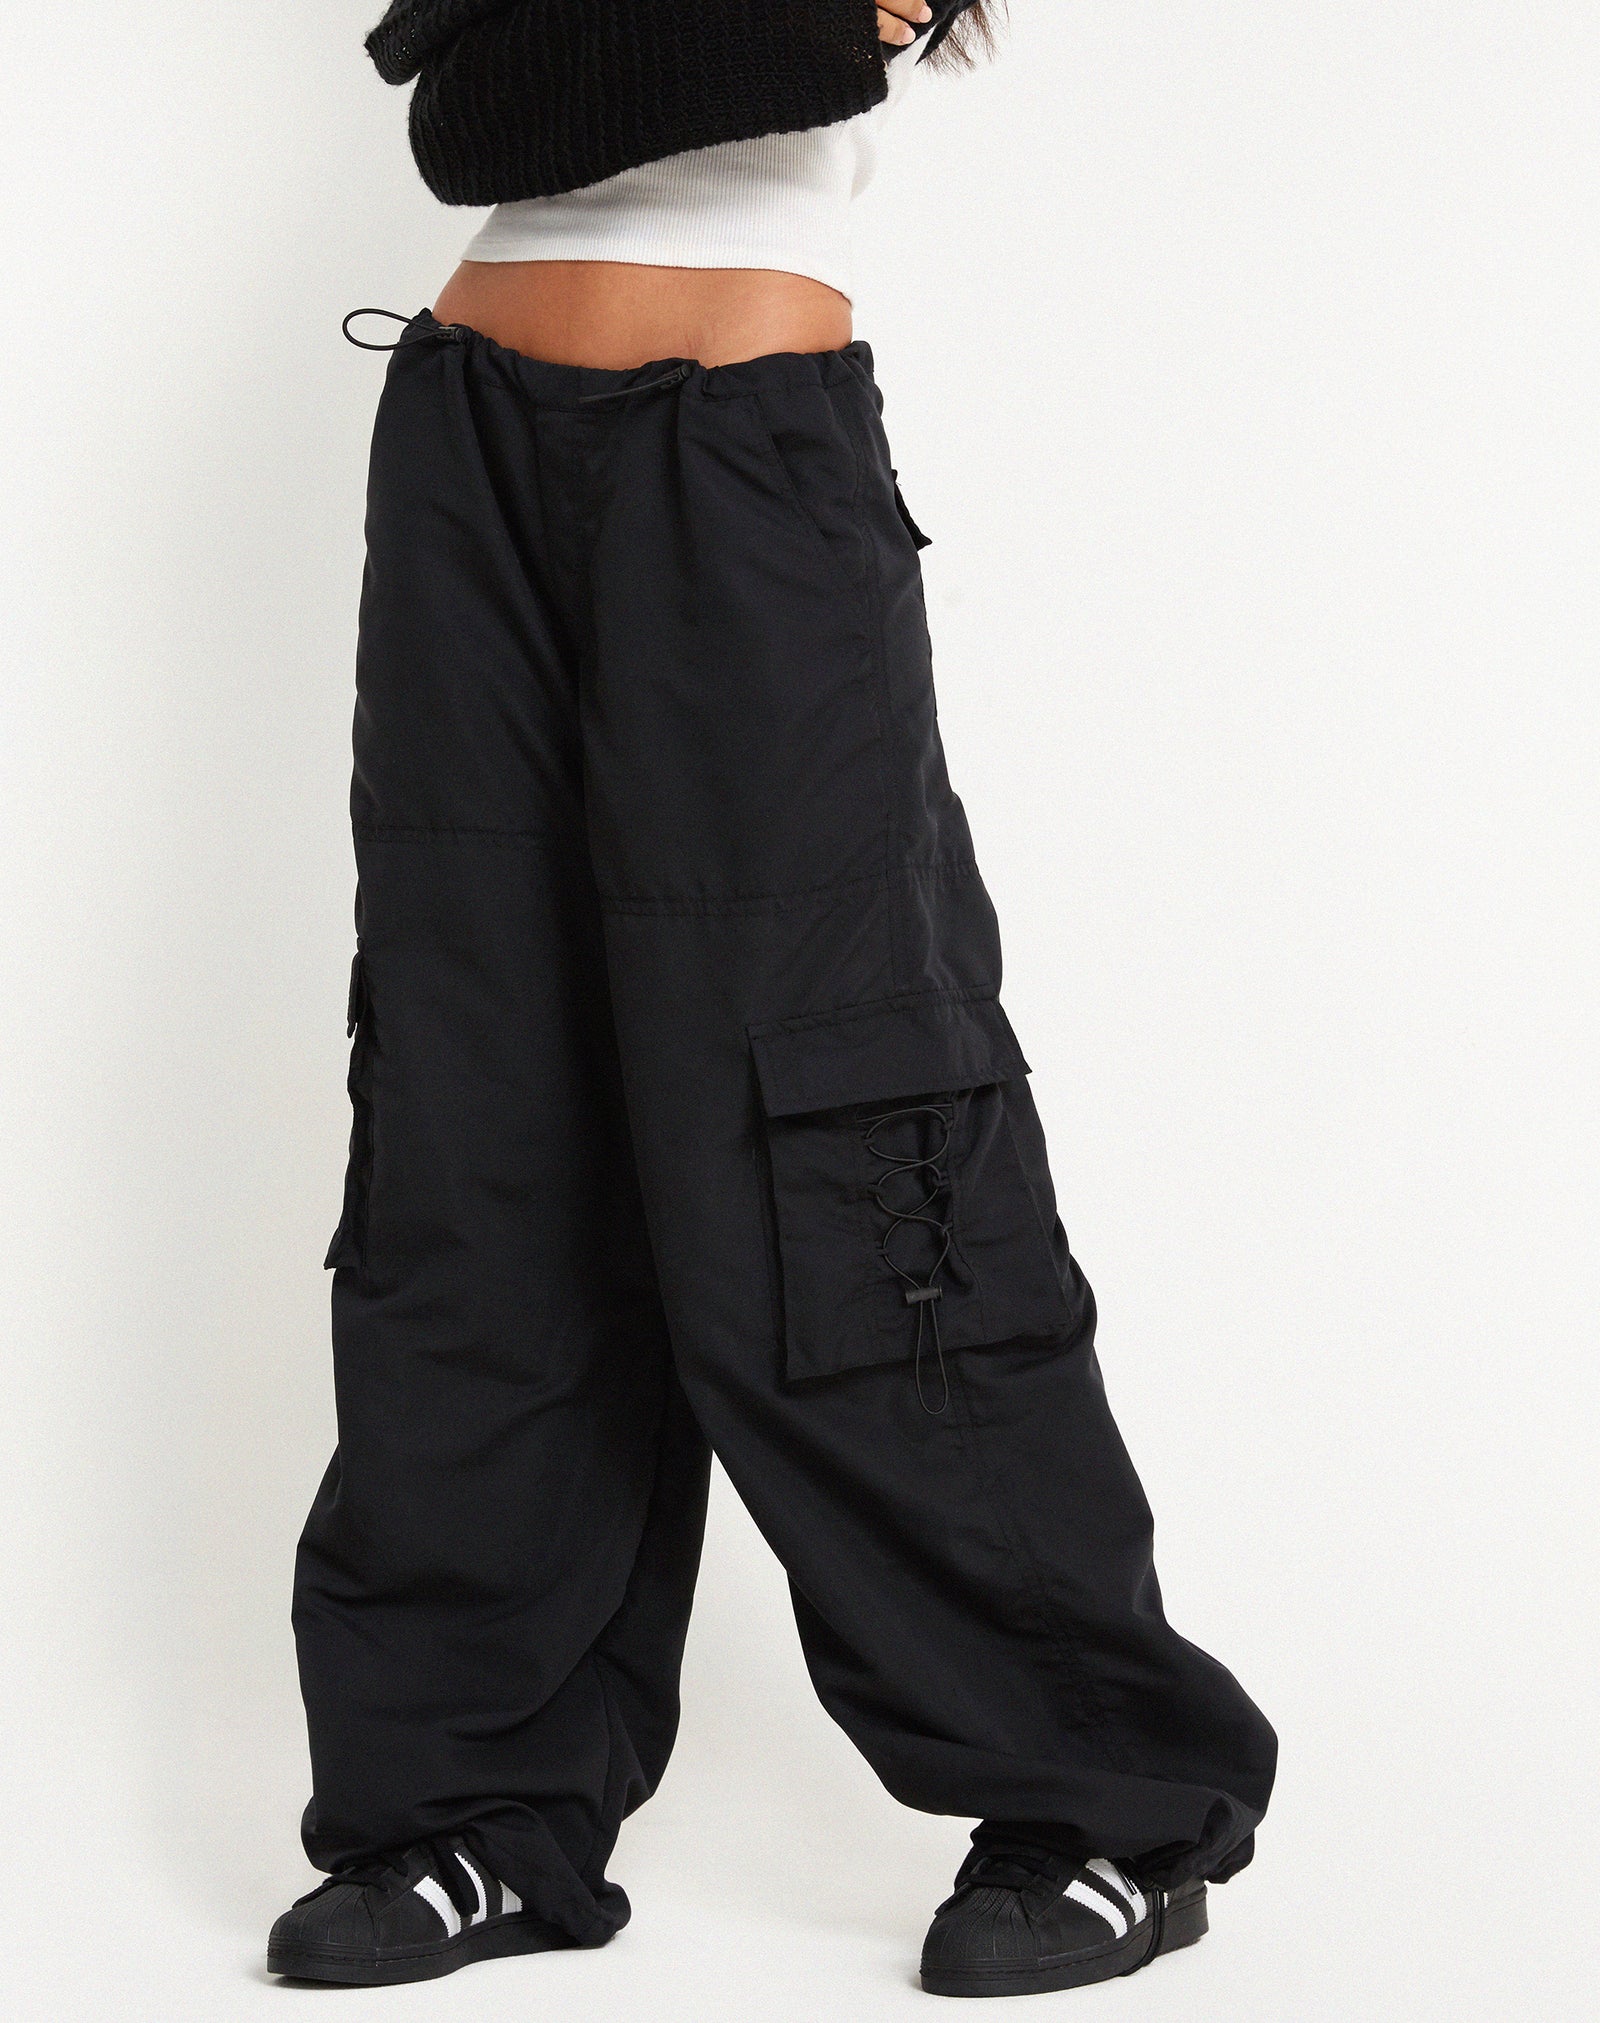 10 Black cargo pants ideas  black cargo pants fashion outfits aesthetic  clothes